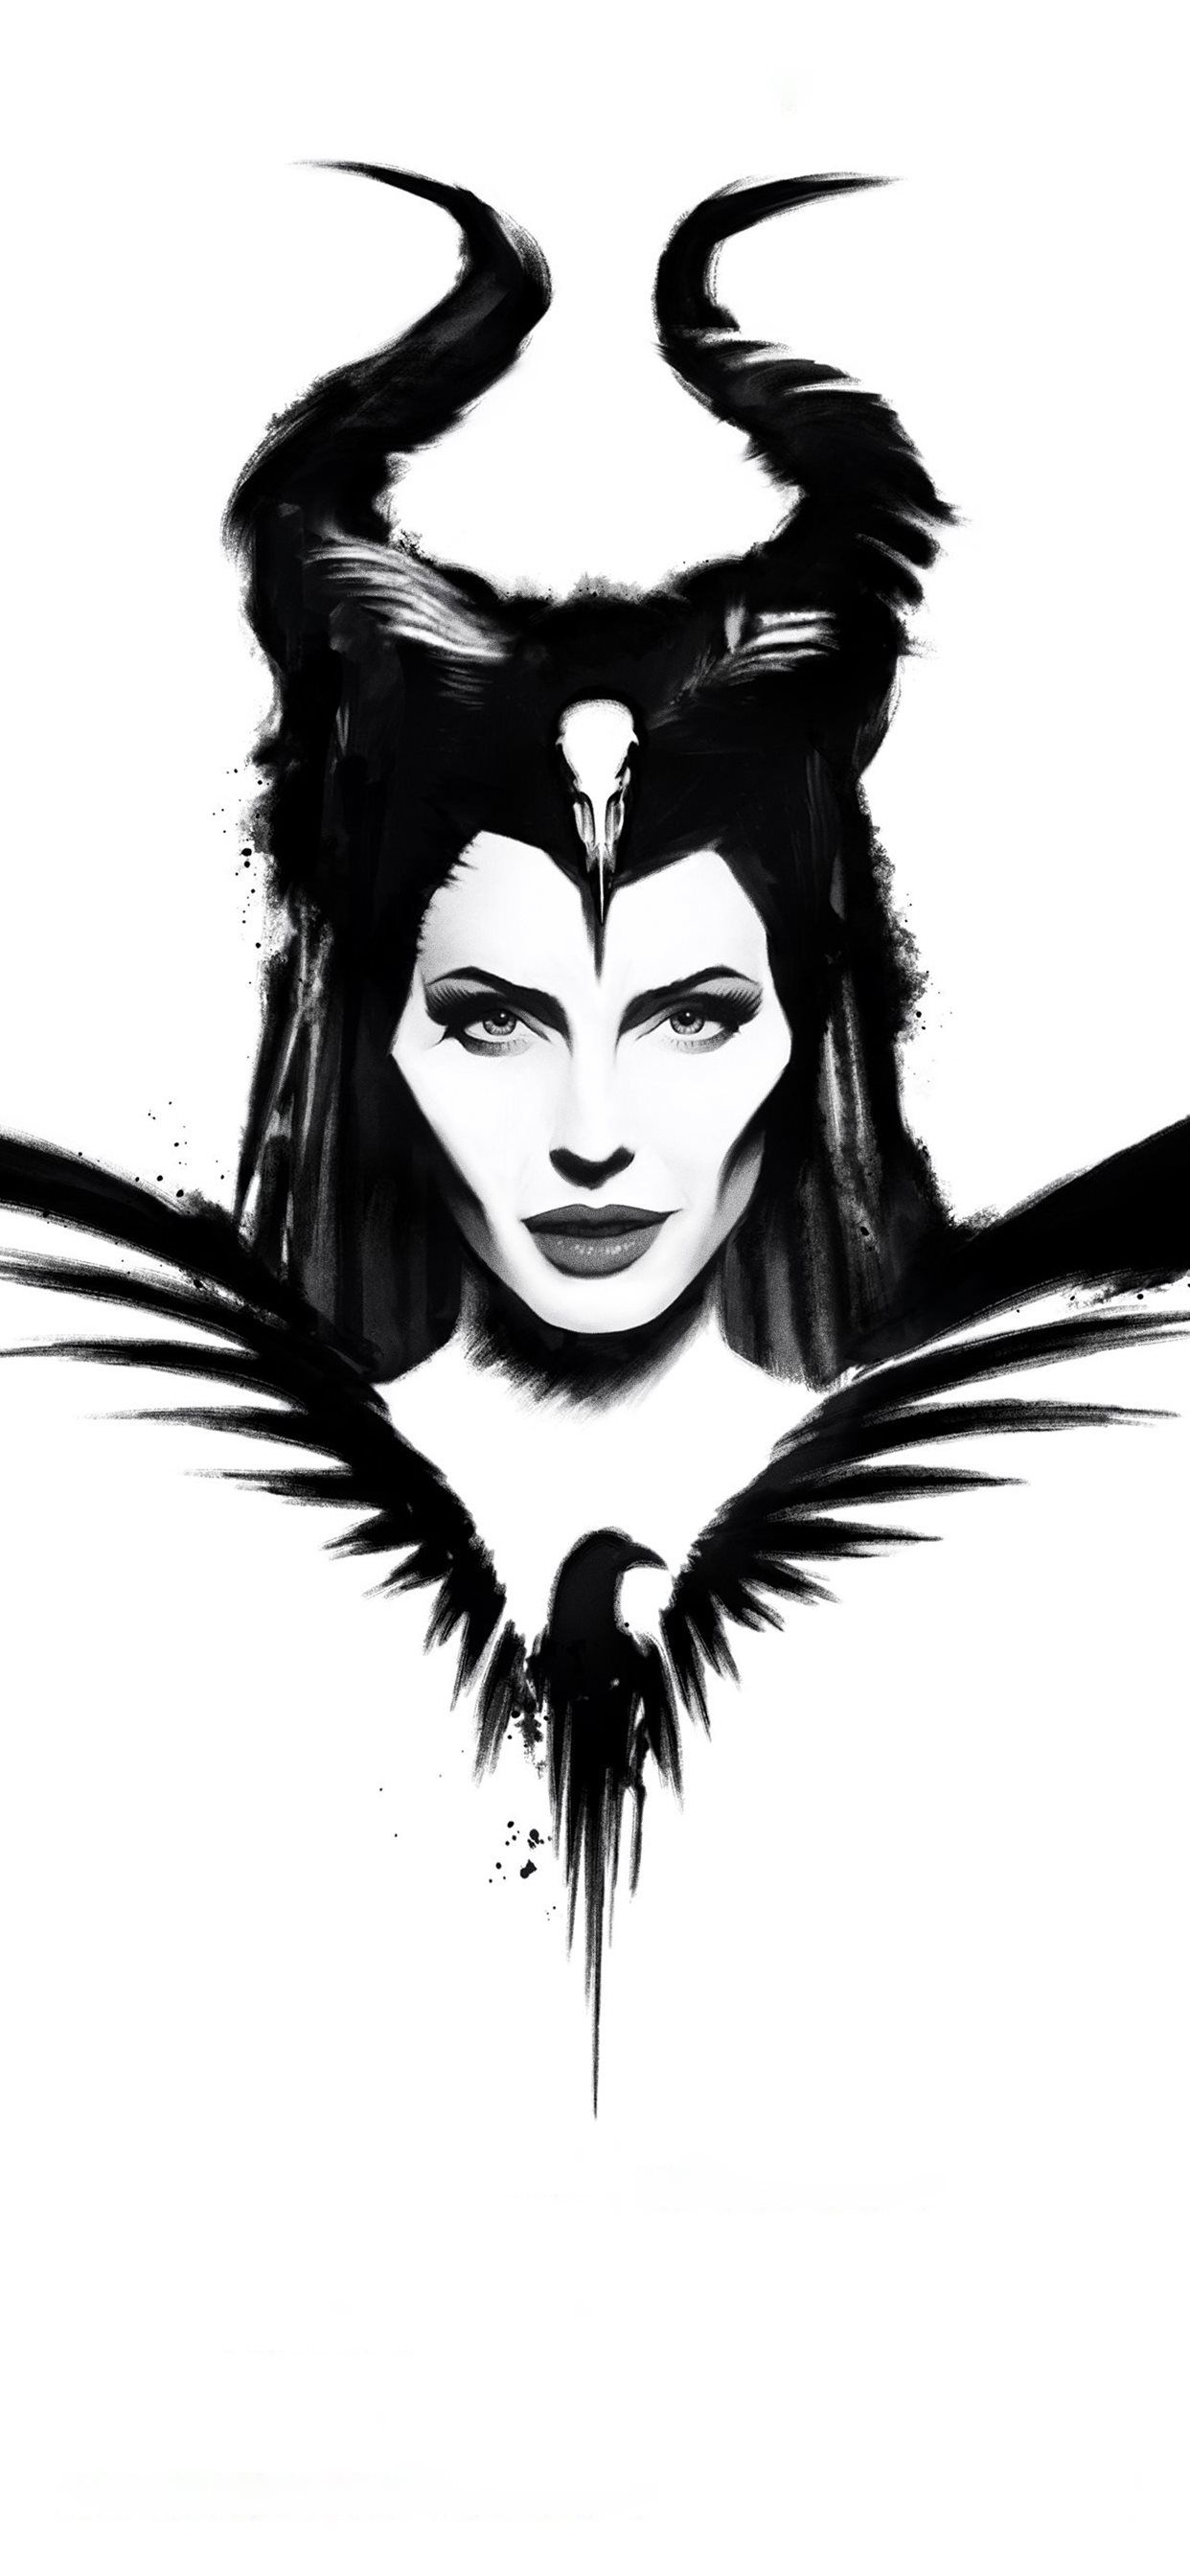 maleficent mistress of evil poster 4k iPhone X Wallpaper Free